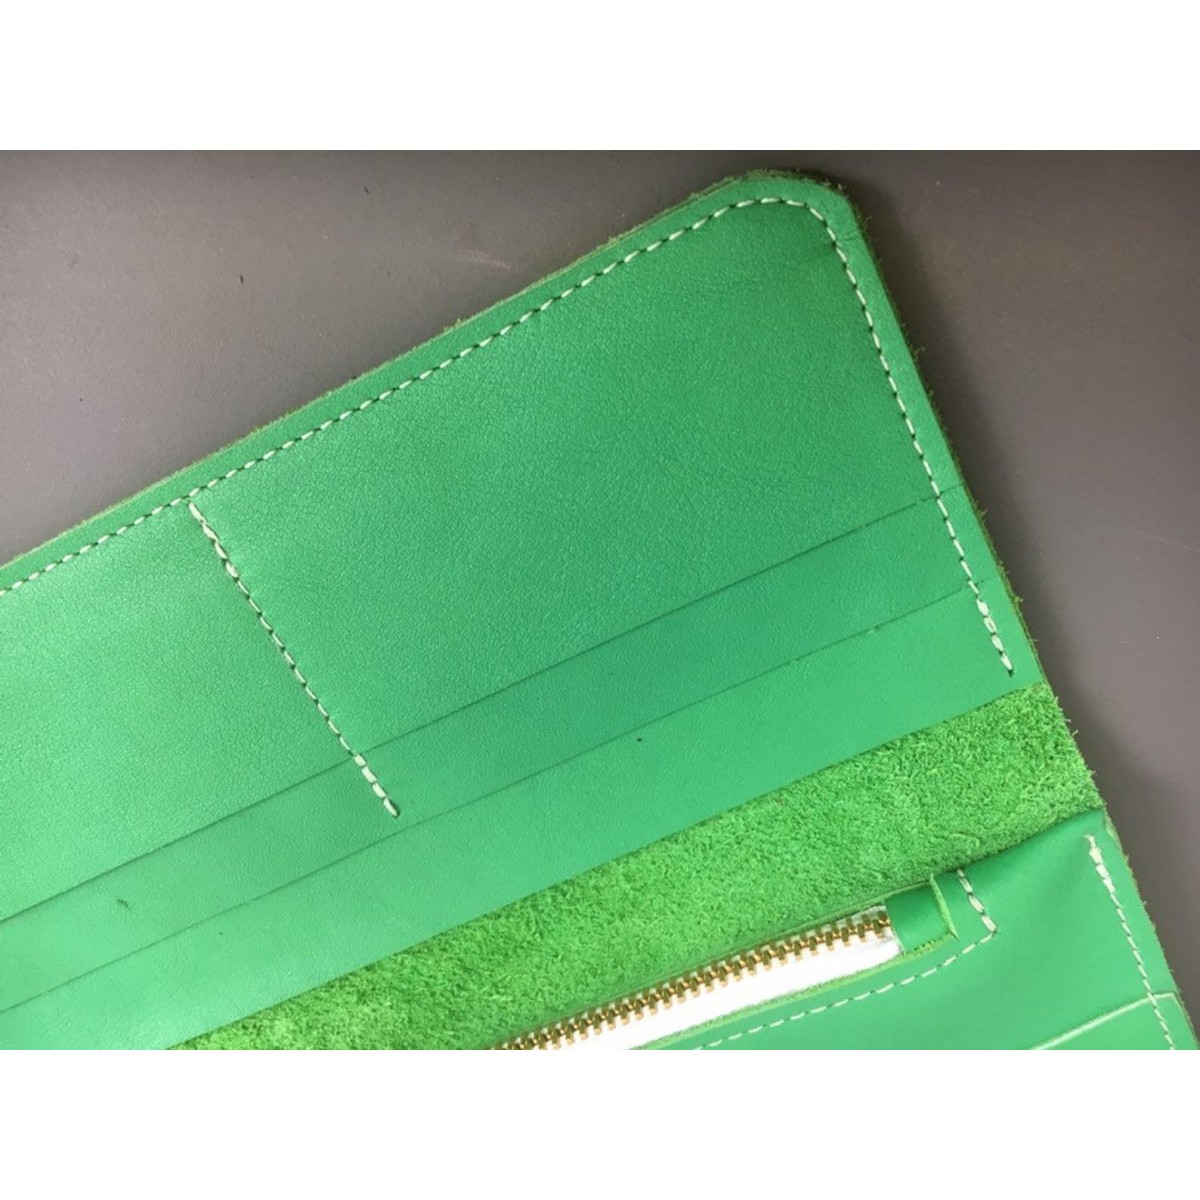 Knallgrüne Ledergeldbörse // Leder Portemonnaie // Green Leather Wallet // grüne Leder Brieftasche // maximal 